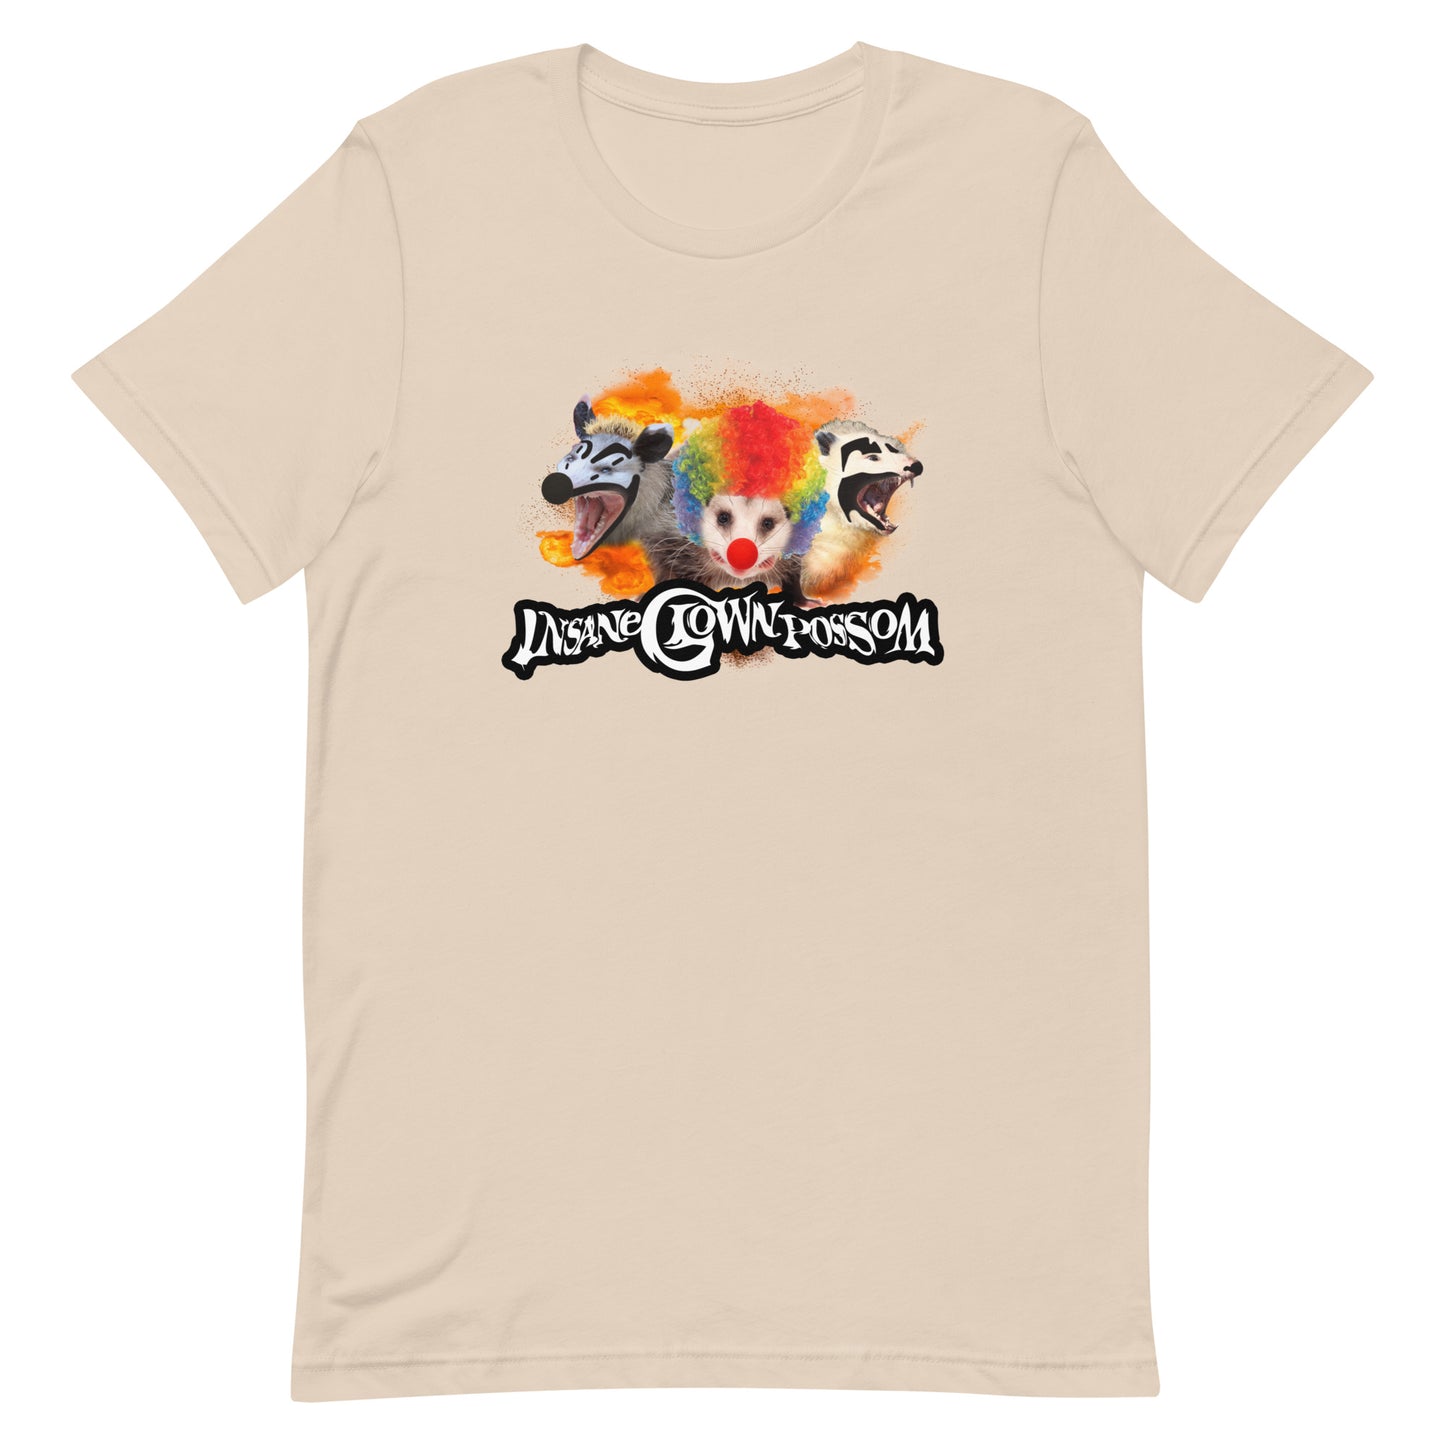 Insane Clown Possum Unisex t-shirt